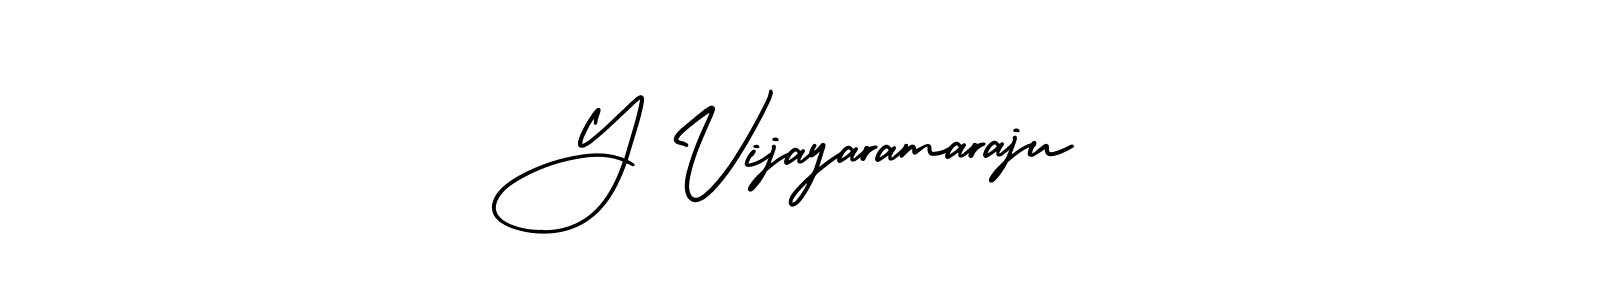 How to Draw Y Vijayaramaraju signature style? AmerikaSignatureDemo-Regular is a latest design signature styles for name Y Vijayaramaraju. Y Vijayaramaraju signature style 3 images and pictures png